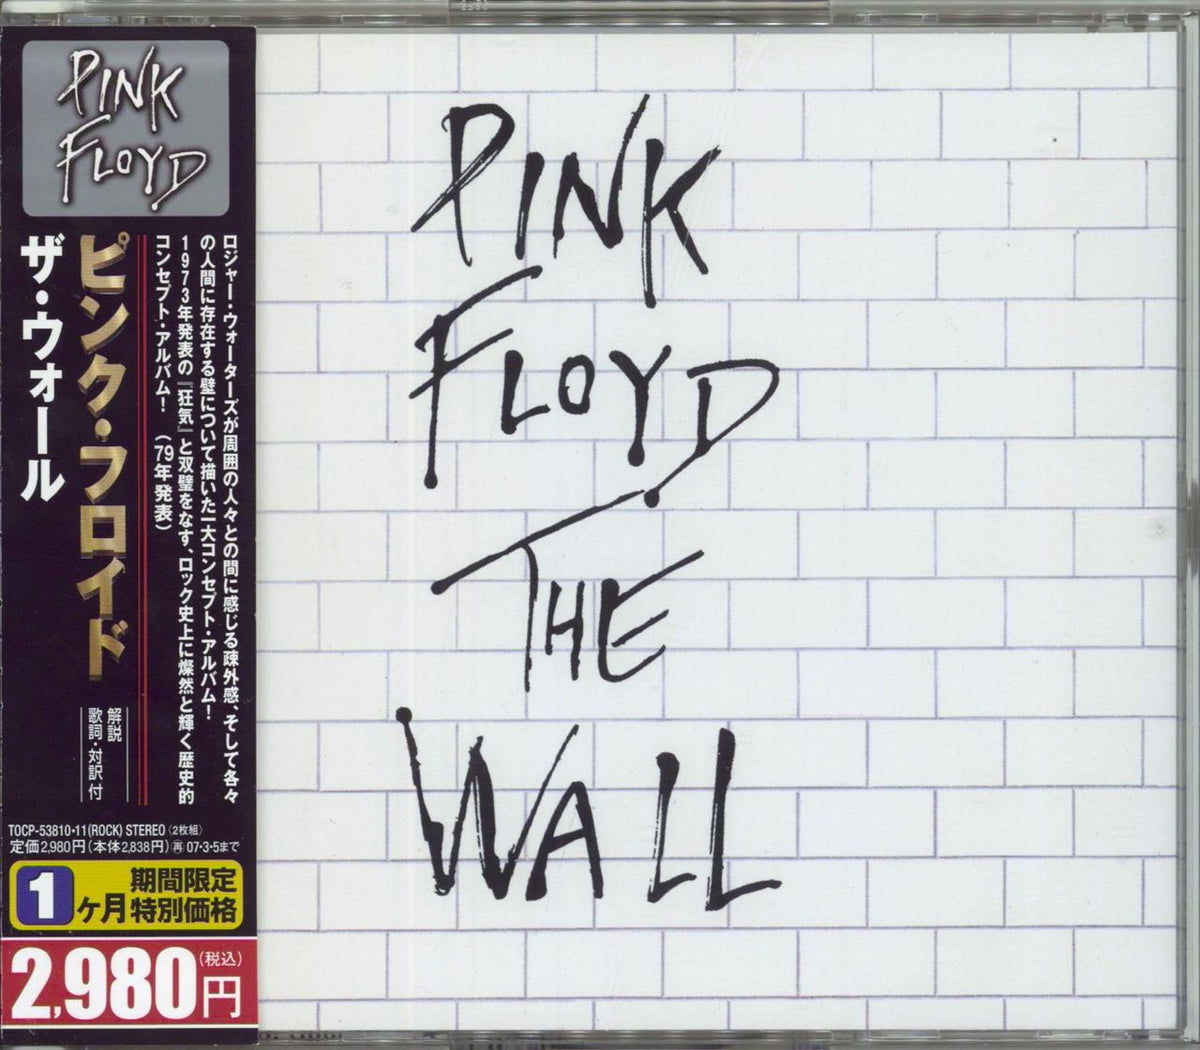 Pink Floyd The Wall Japanese 2-CD album set — RareVinyl.com